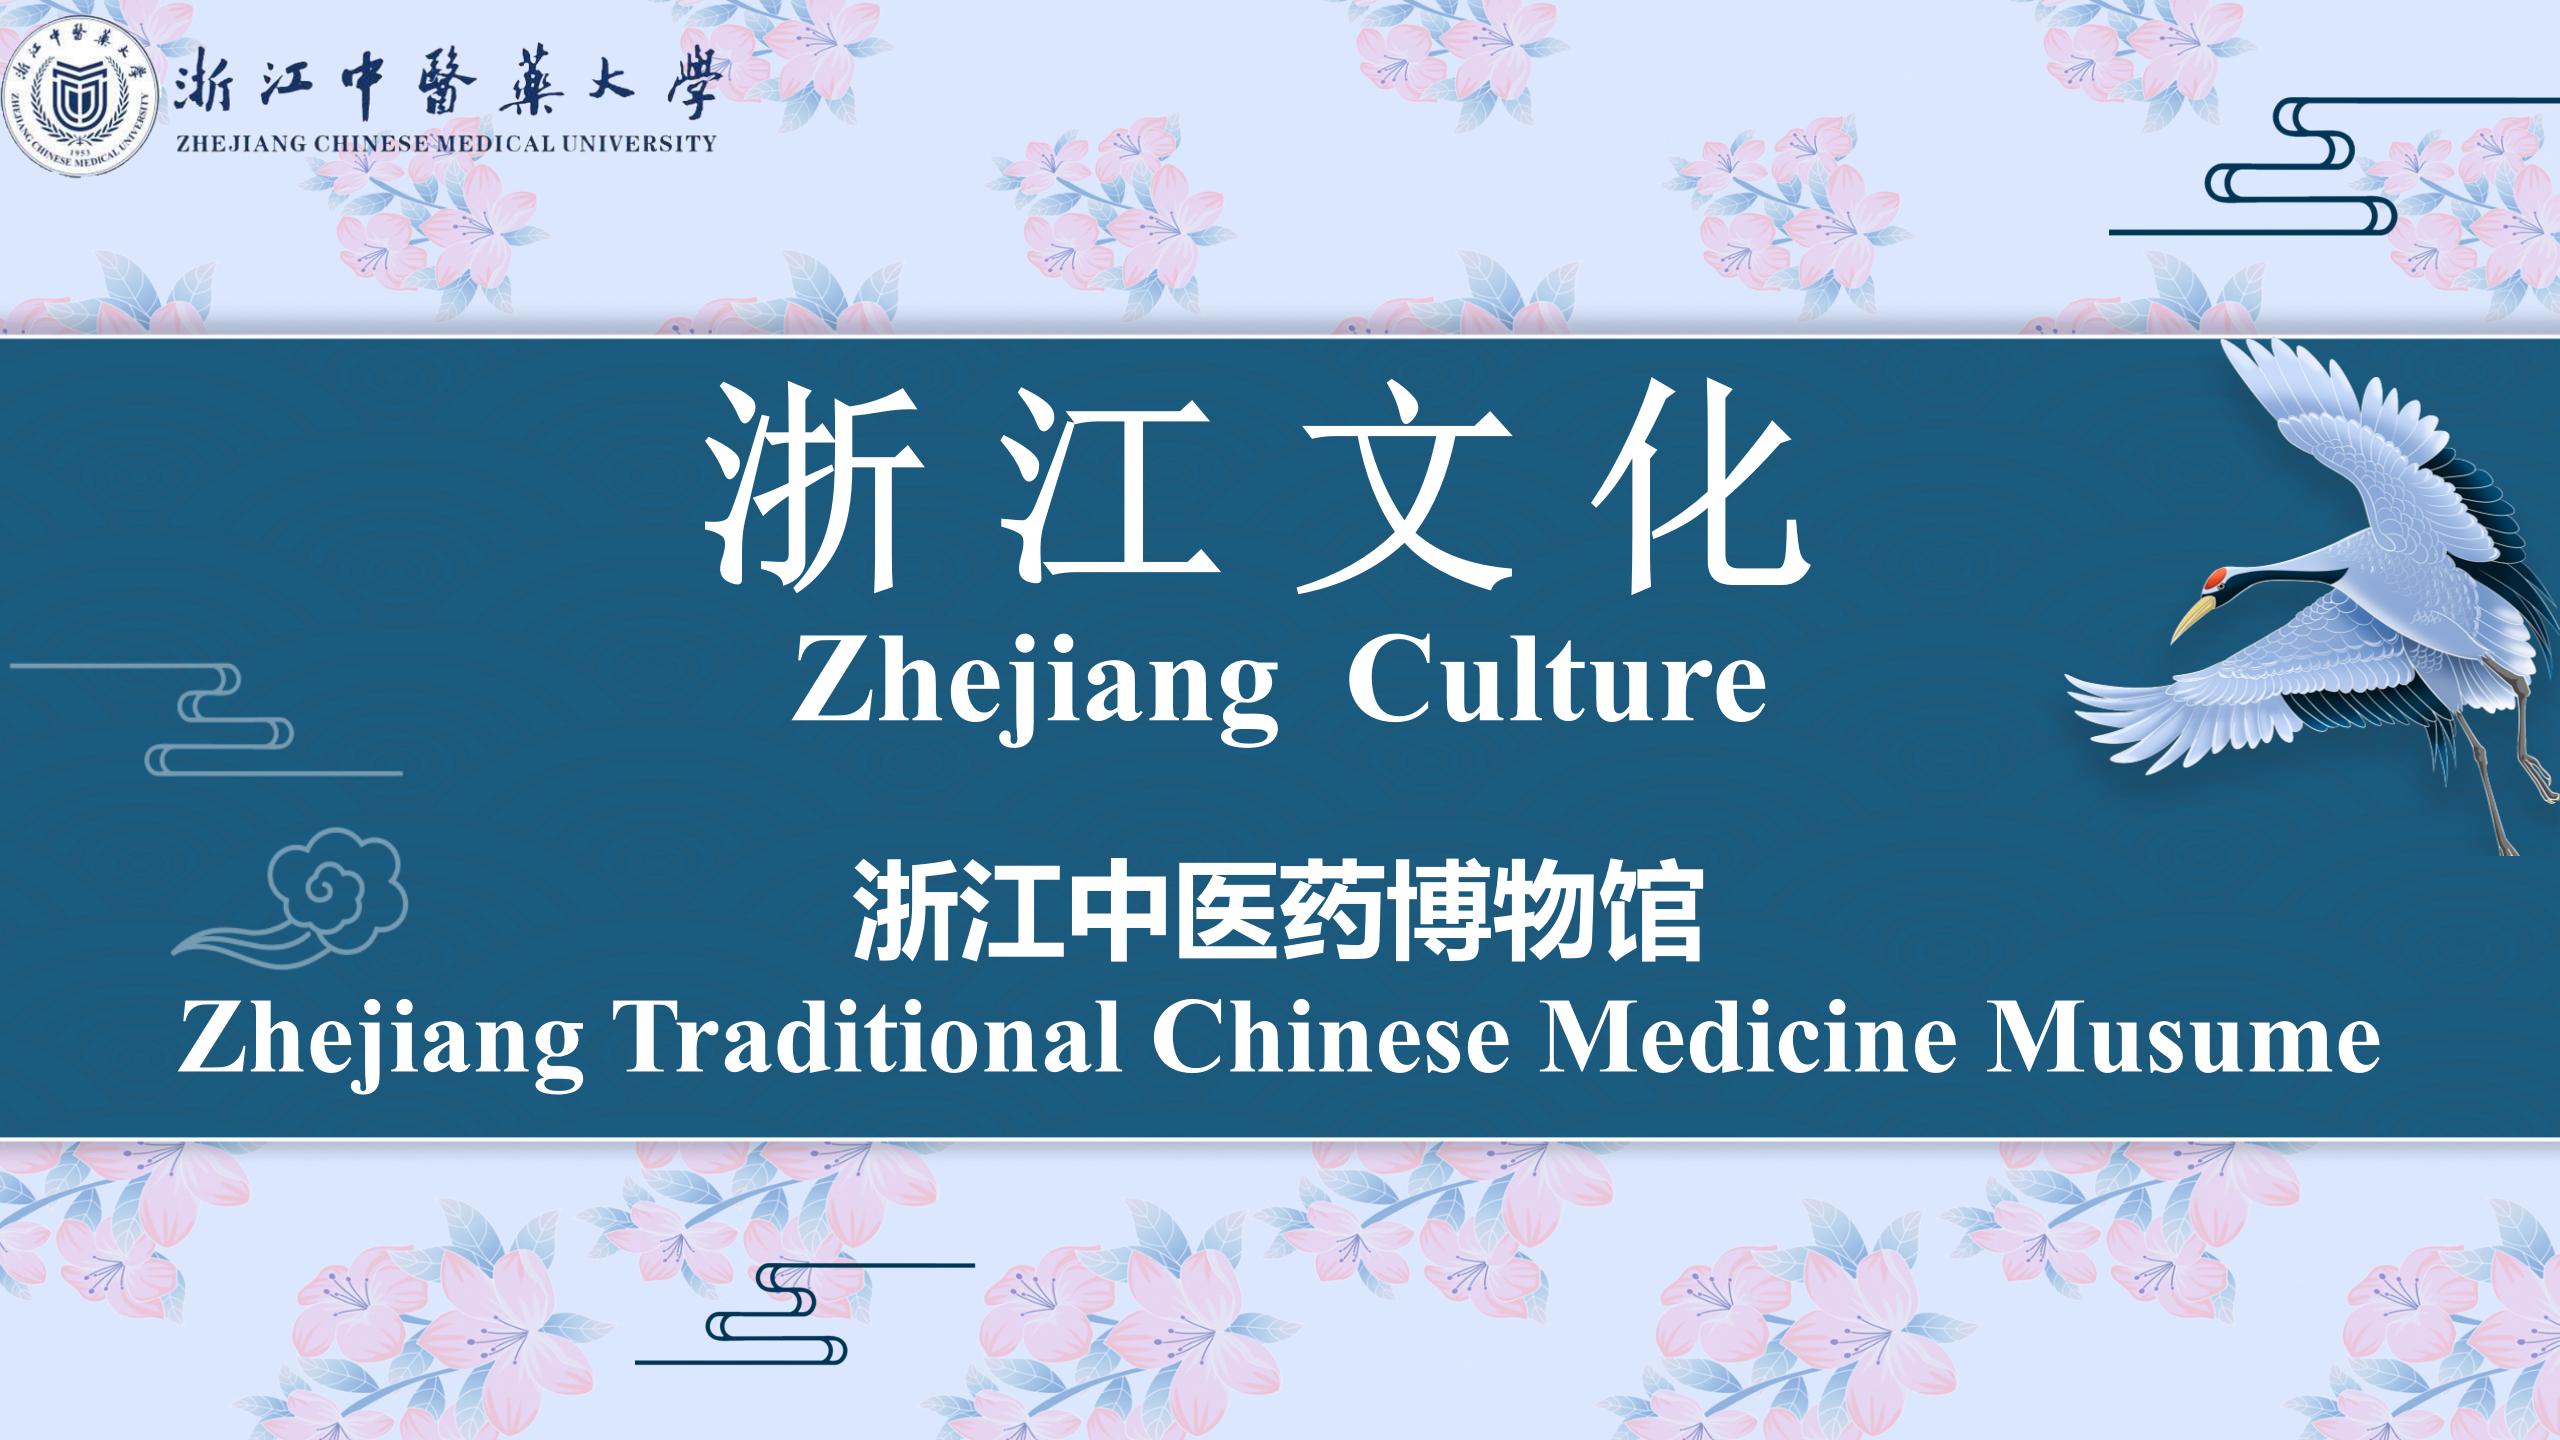 Zhejiang Traditional Chinese Medicine Musume